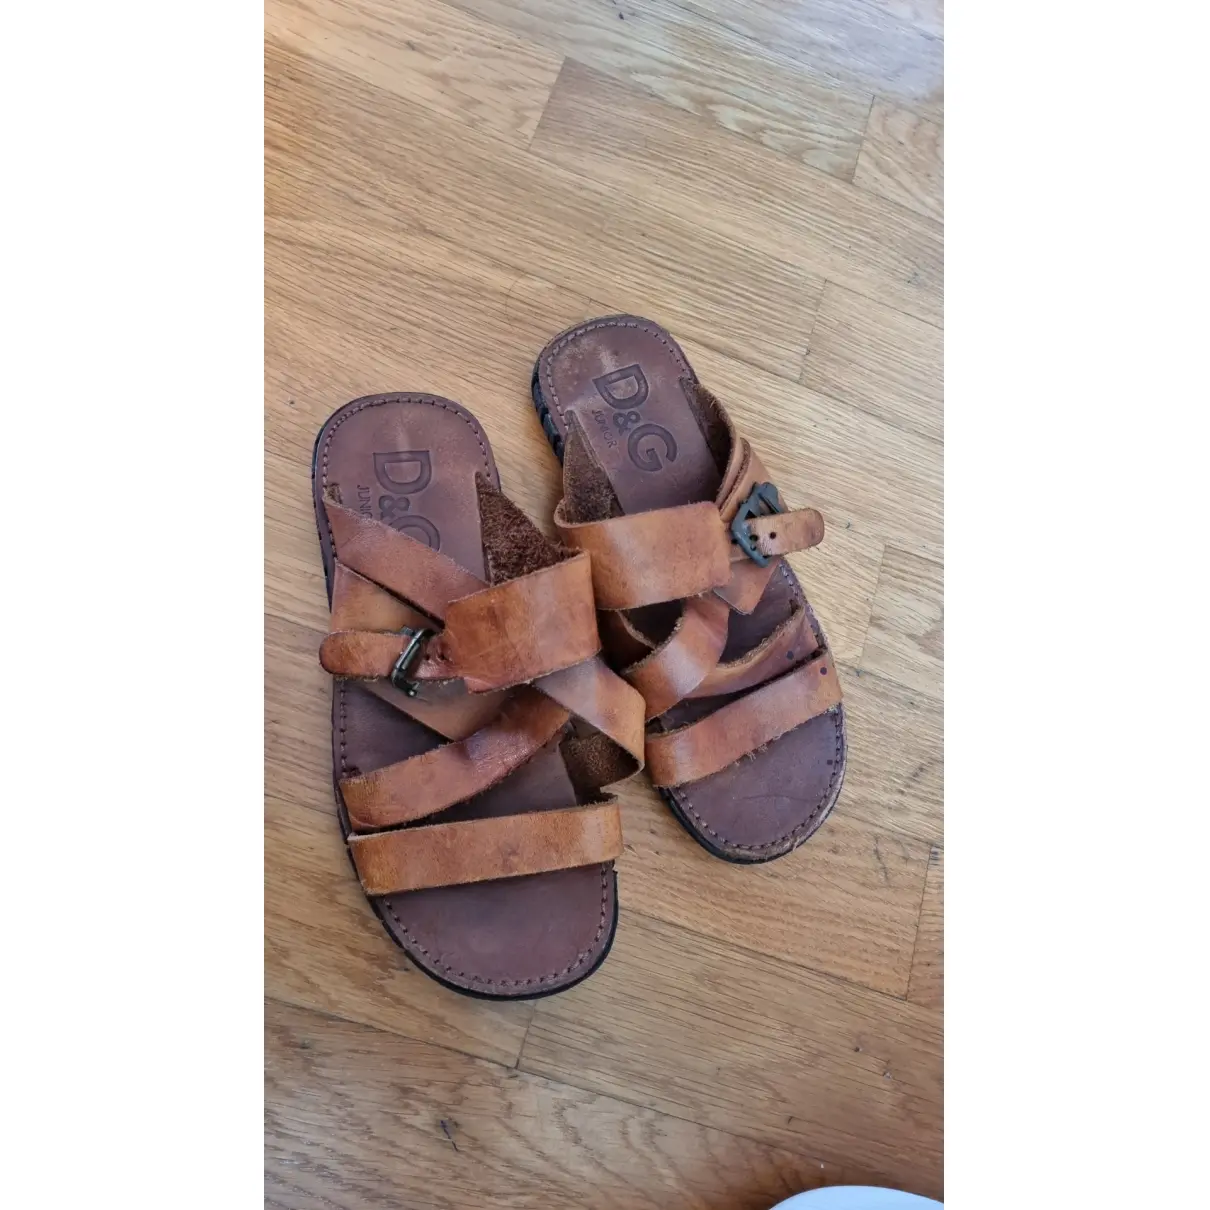 Leather sandals D&G